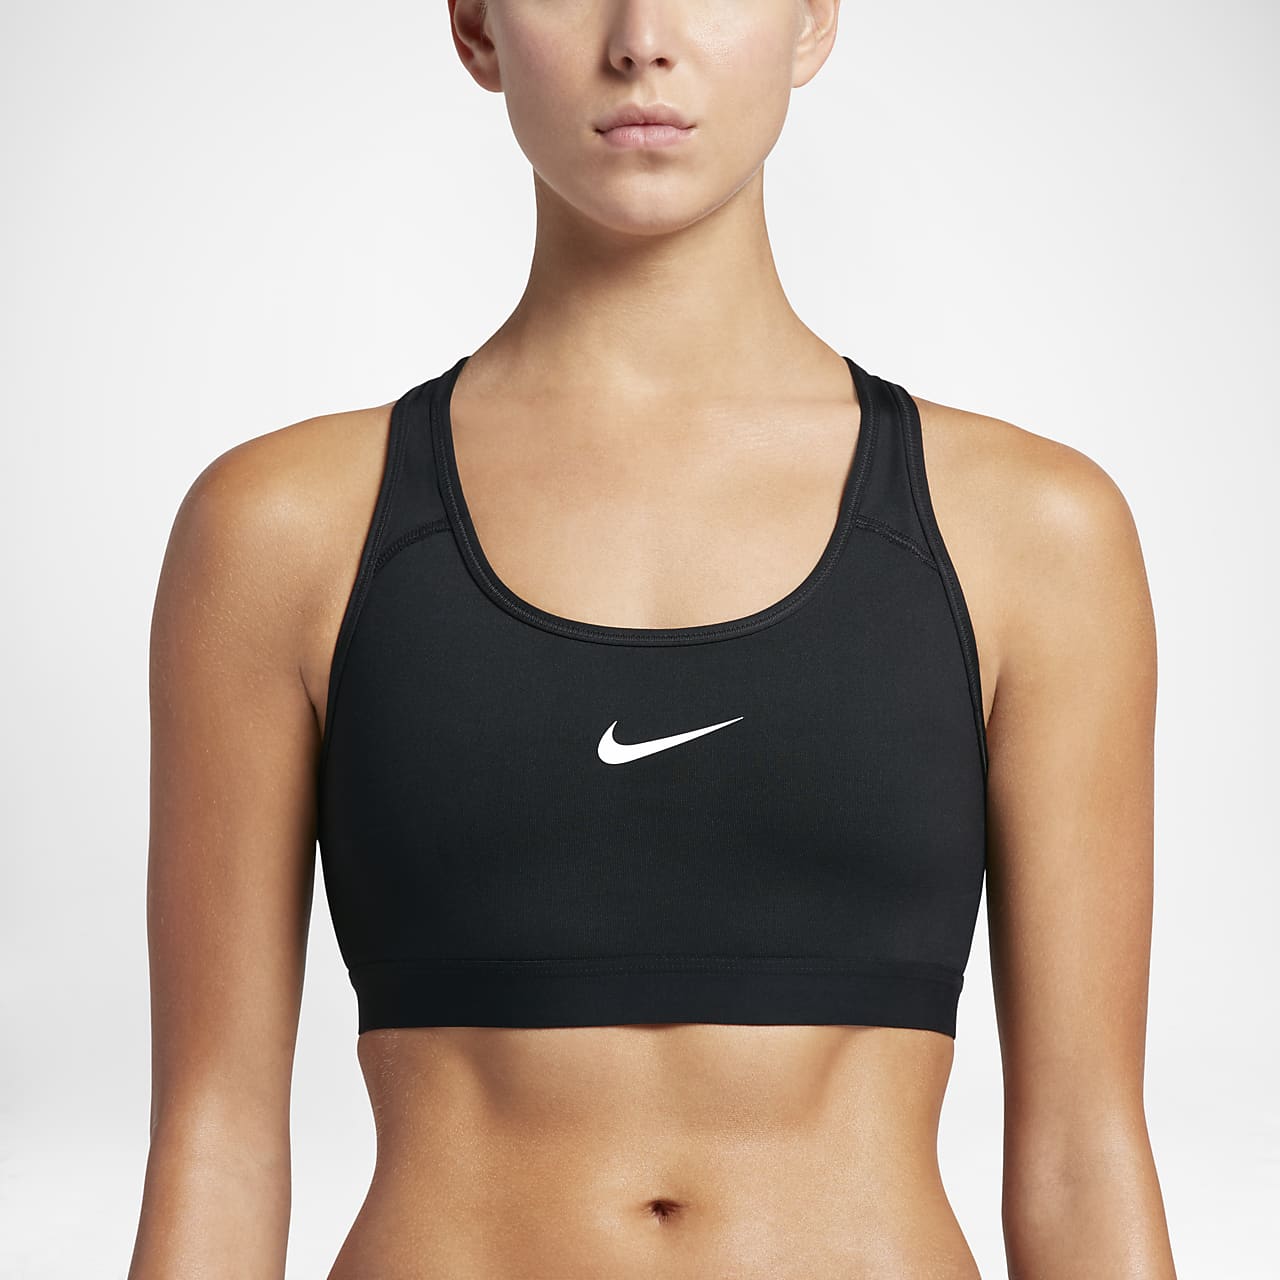 Nike Classic Women's Sports Bra.